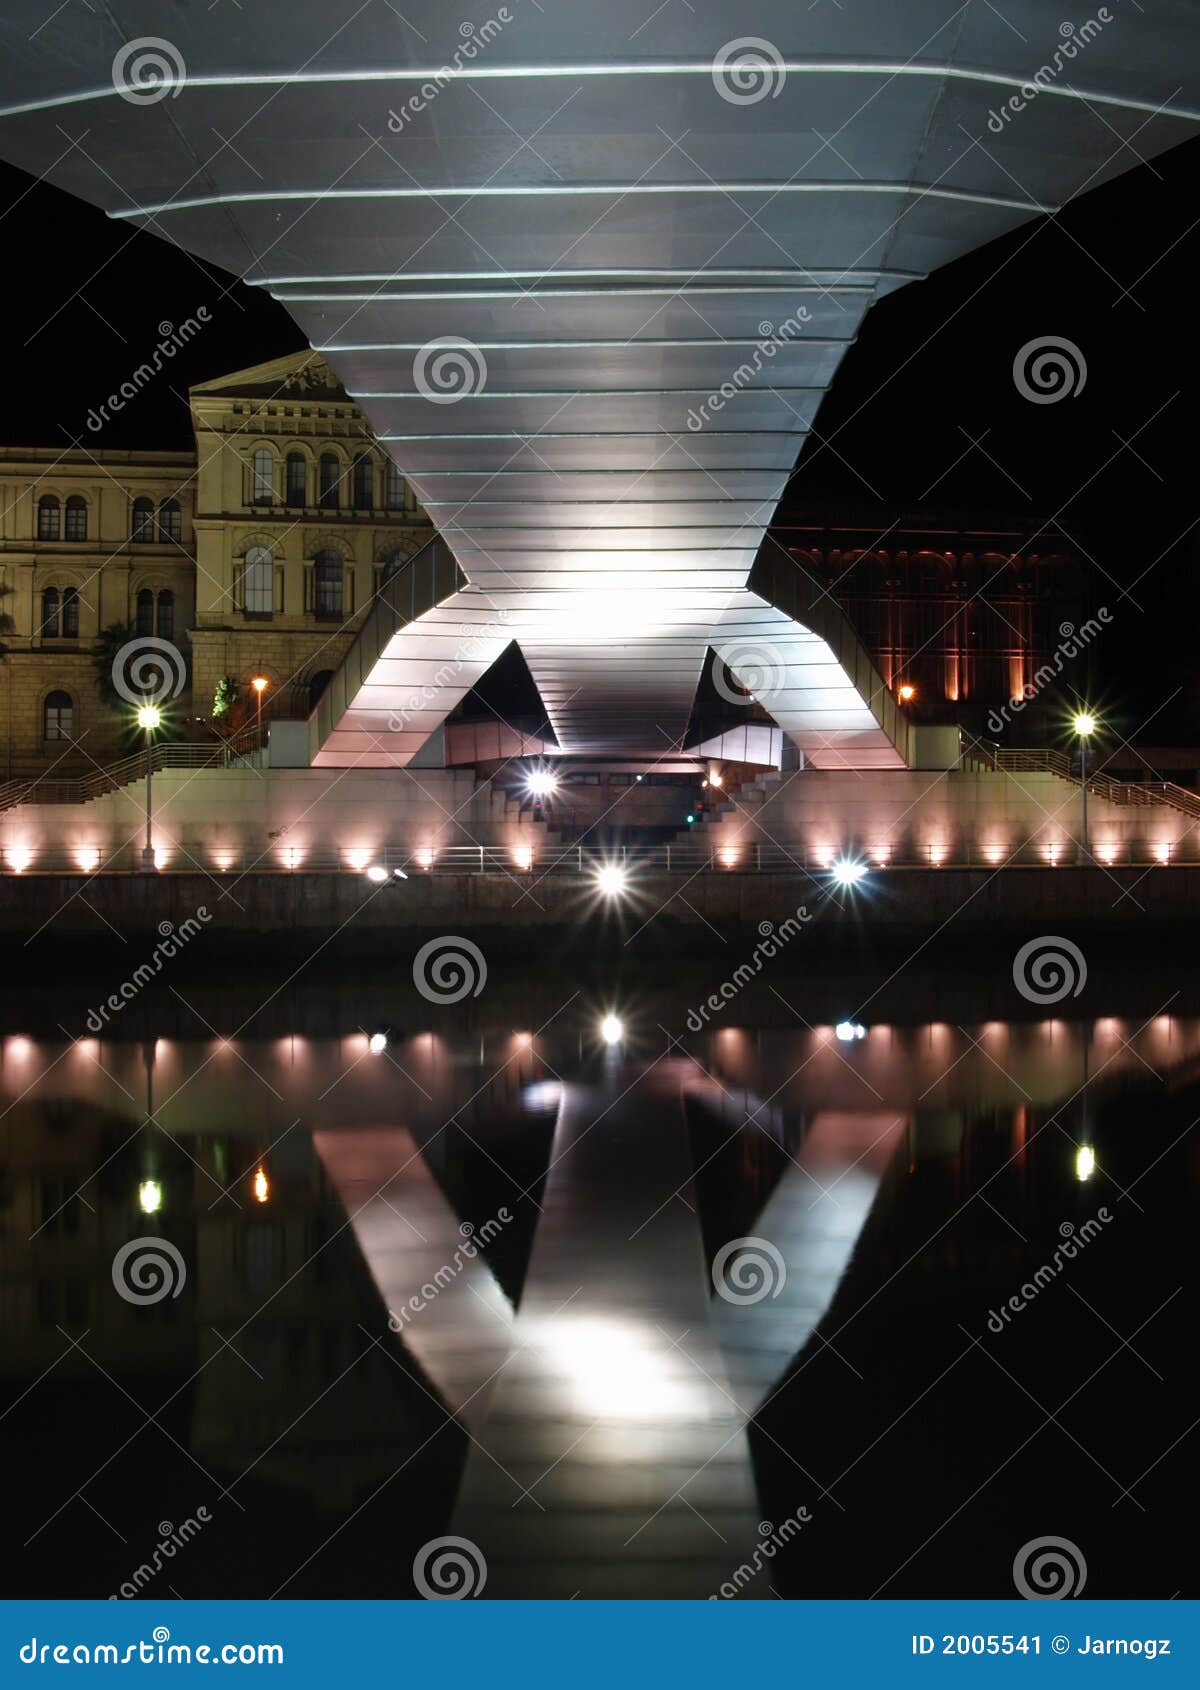 reflection of deusto universitys bridge